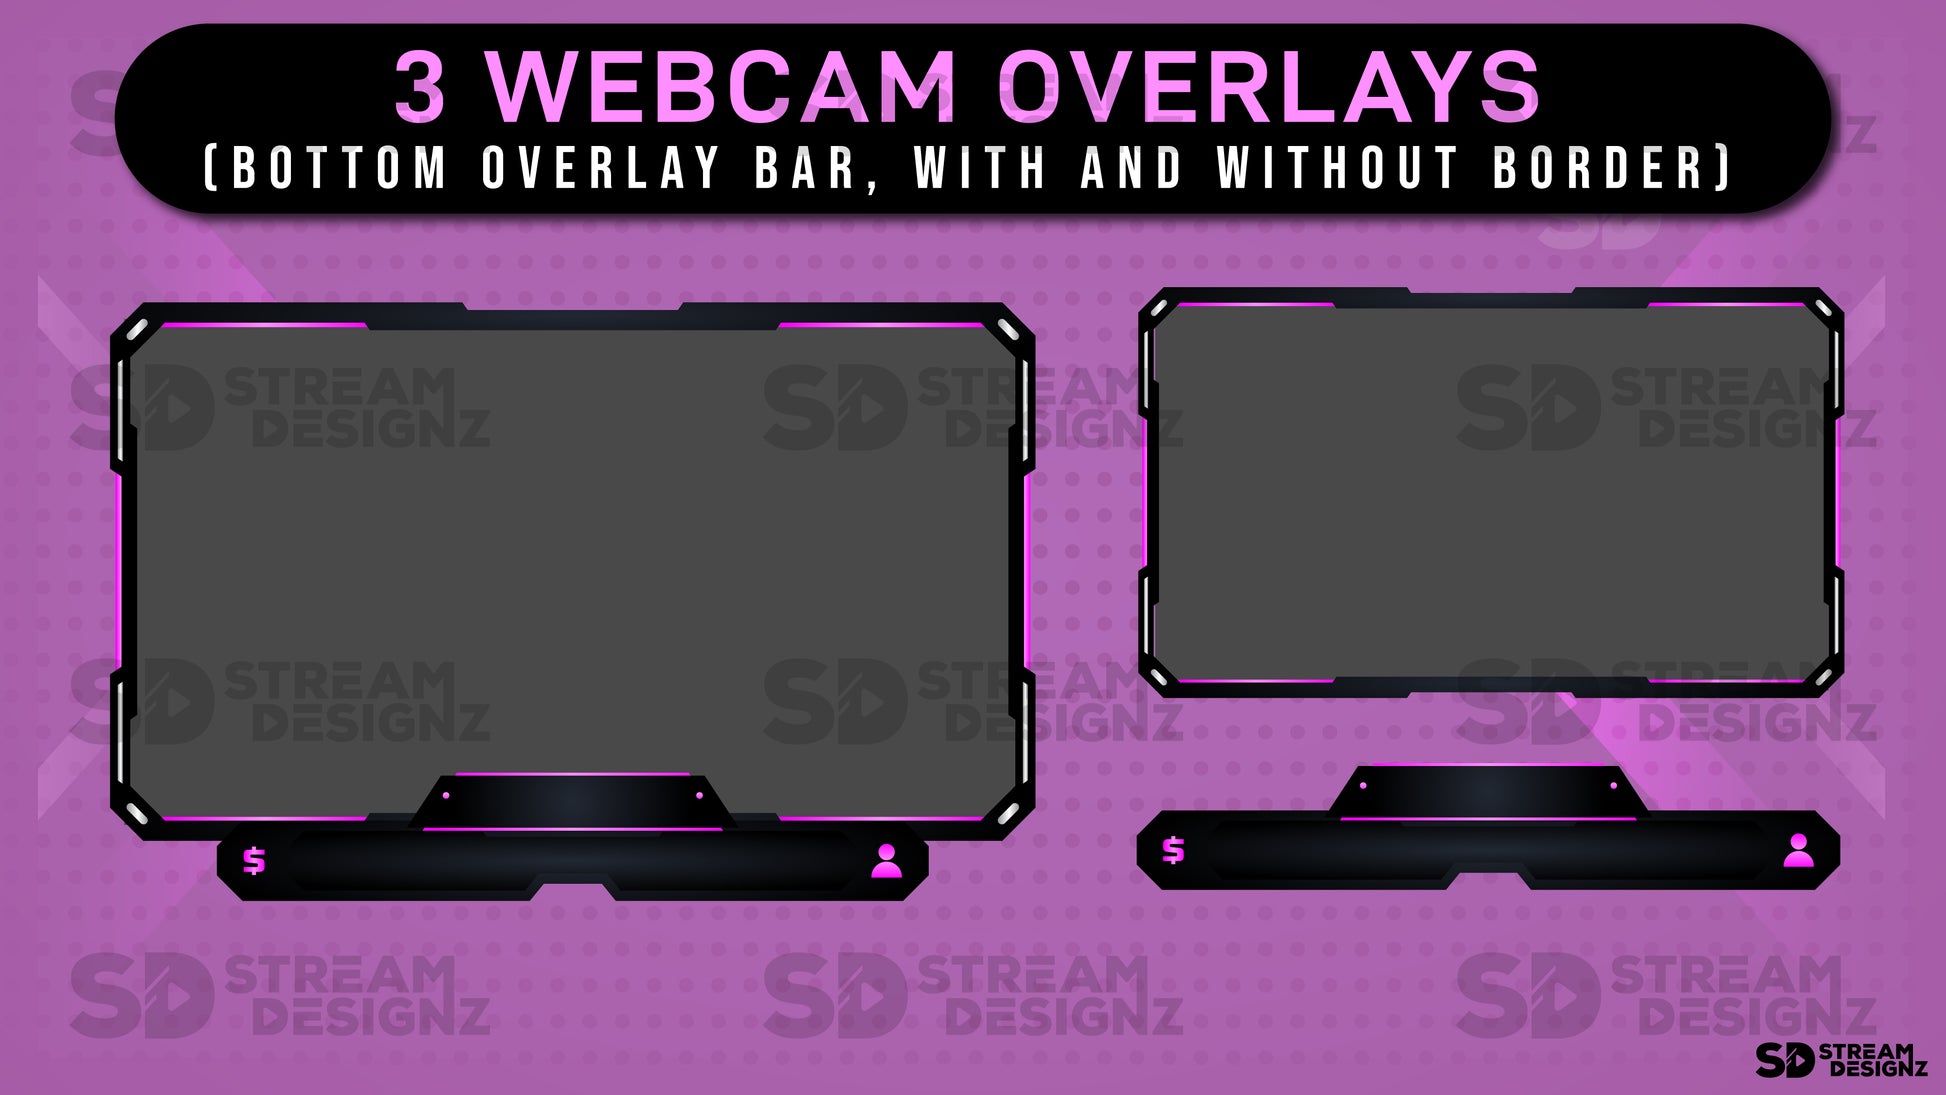 static stream overlay package - pink fury - webcam overlays - stream designz